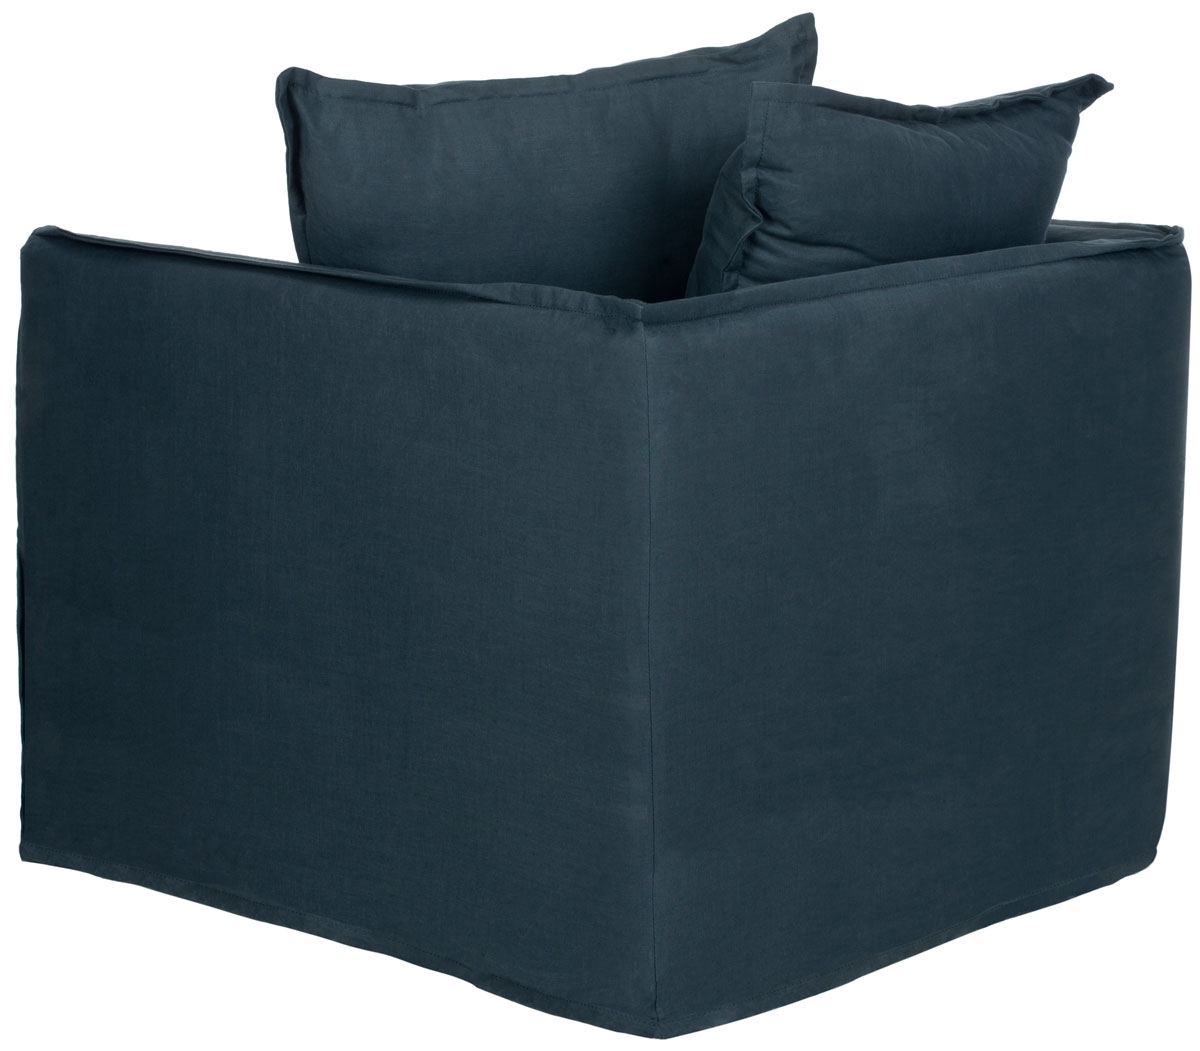 Joey Arm Chair - Blue/Black - Safavieh - Image 3